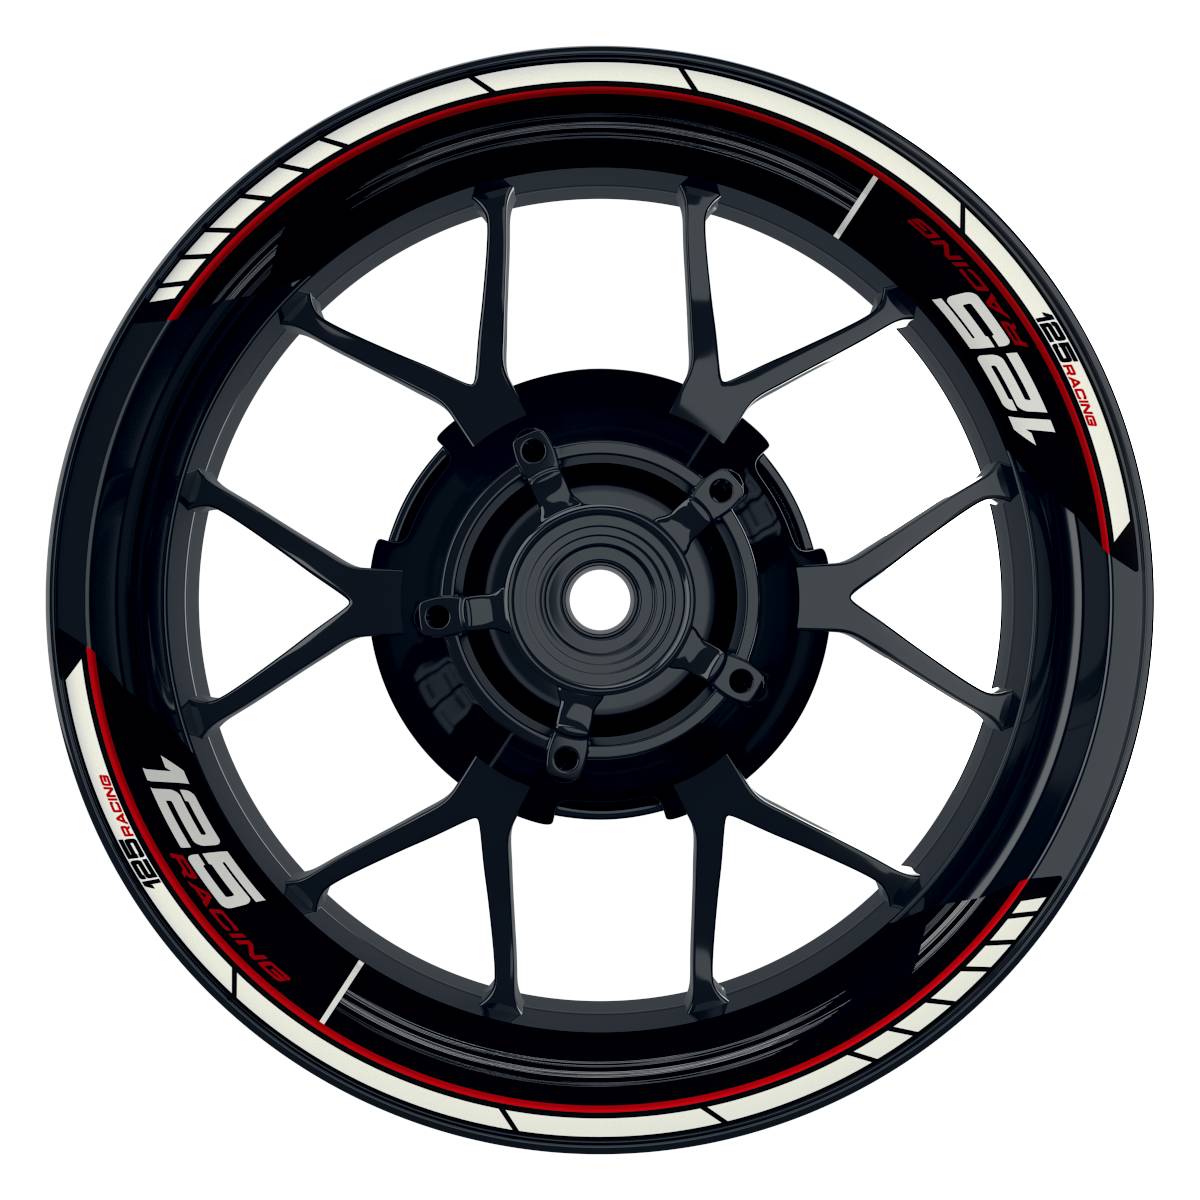 KTM Racing 125 Scratched schwarz rot Frontansicht